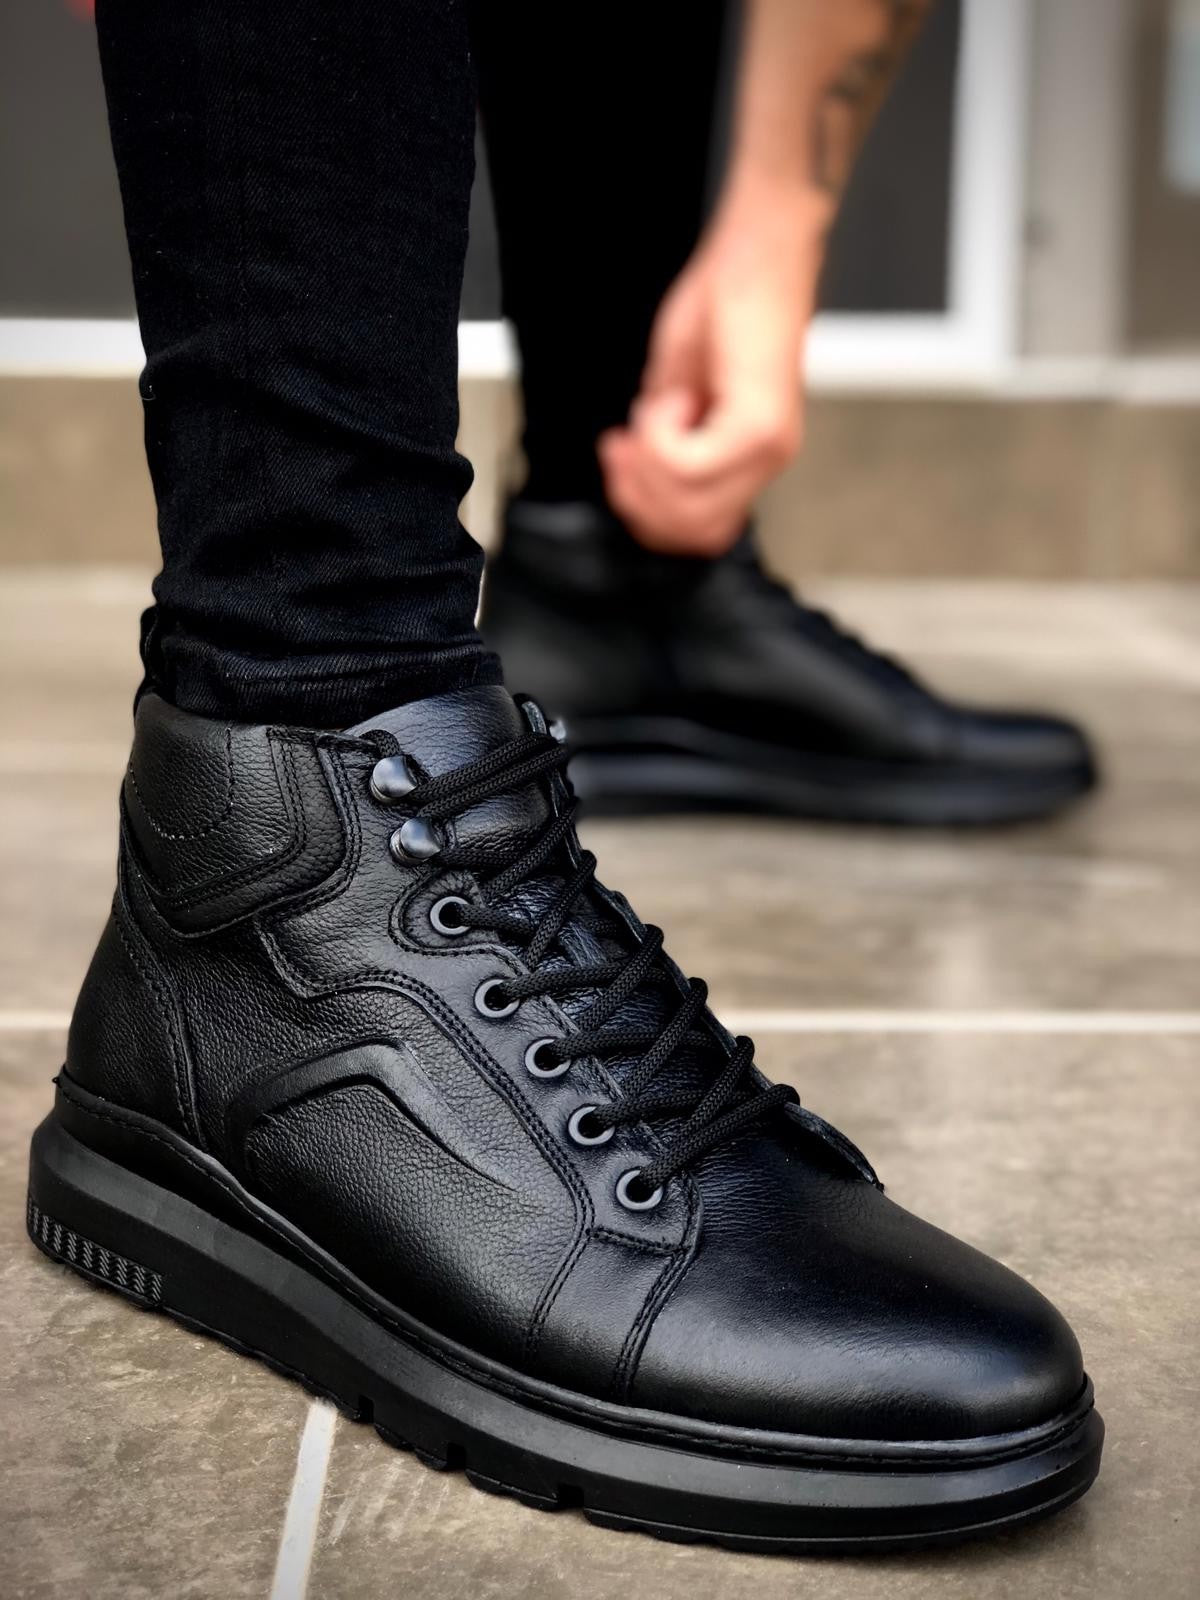 Original Design BA0144 Genuine Leather Zippered Black Men's Sports Half Ankle Boots - STREETMODE ™